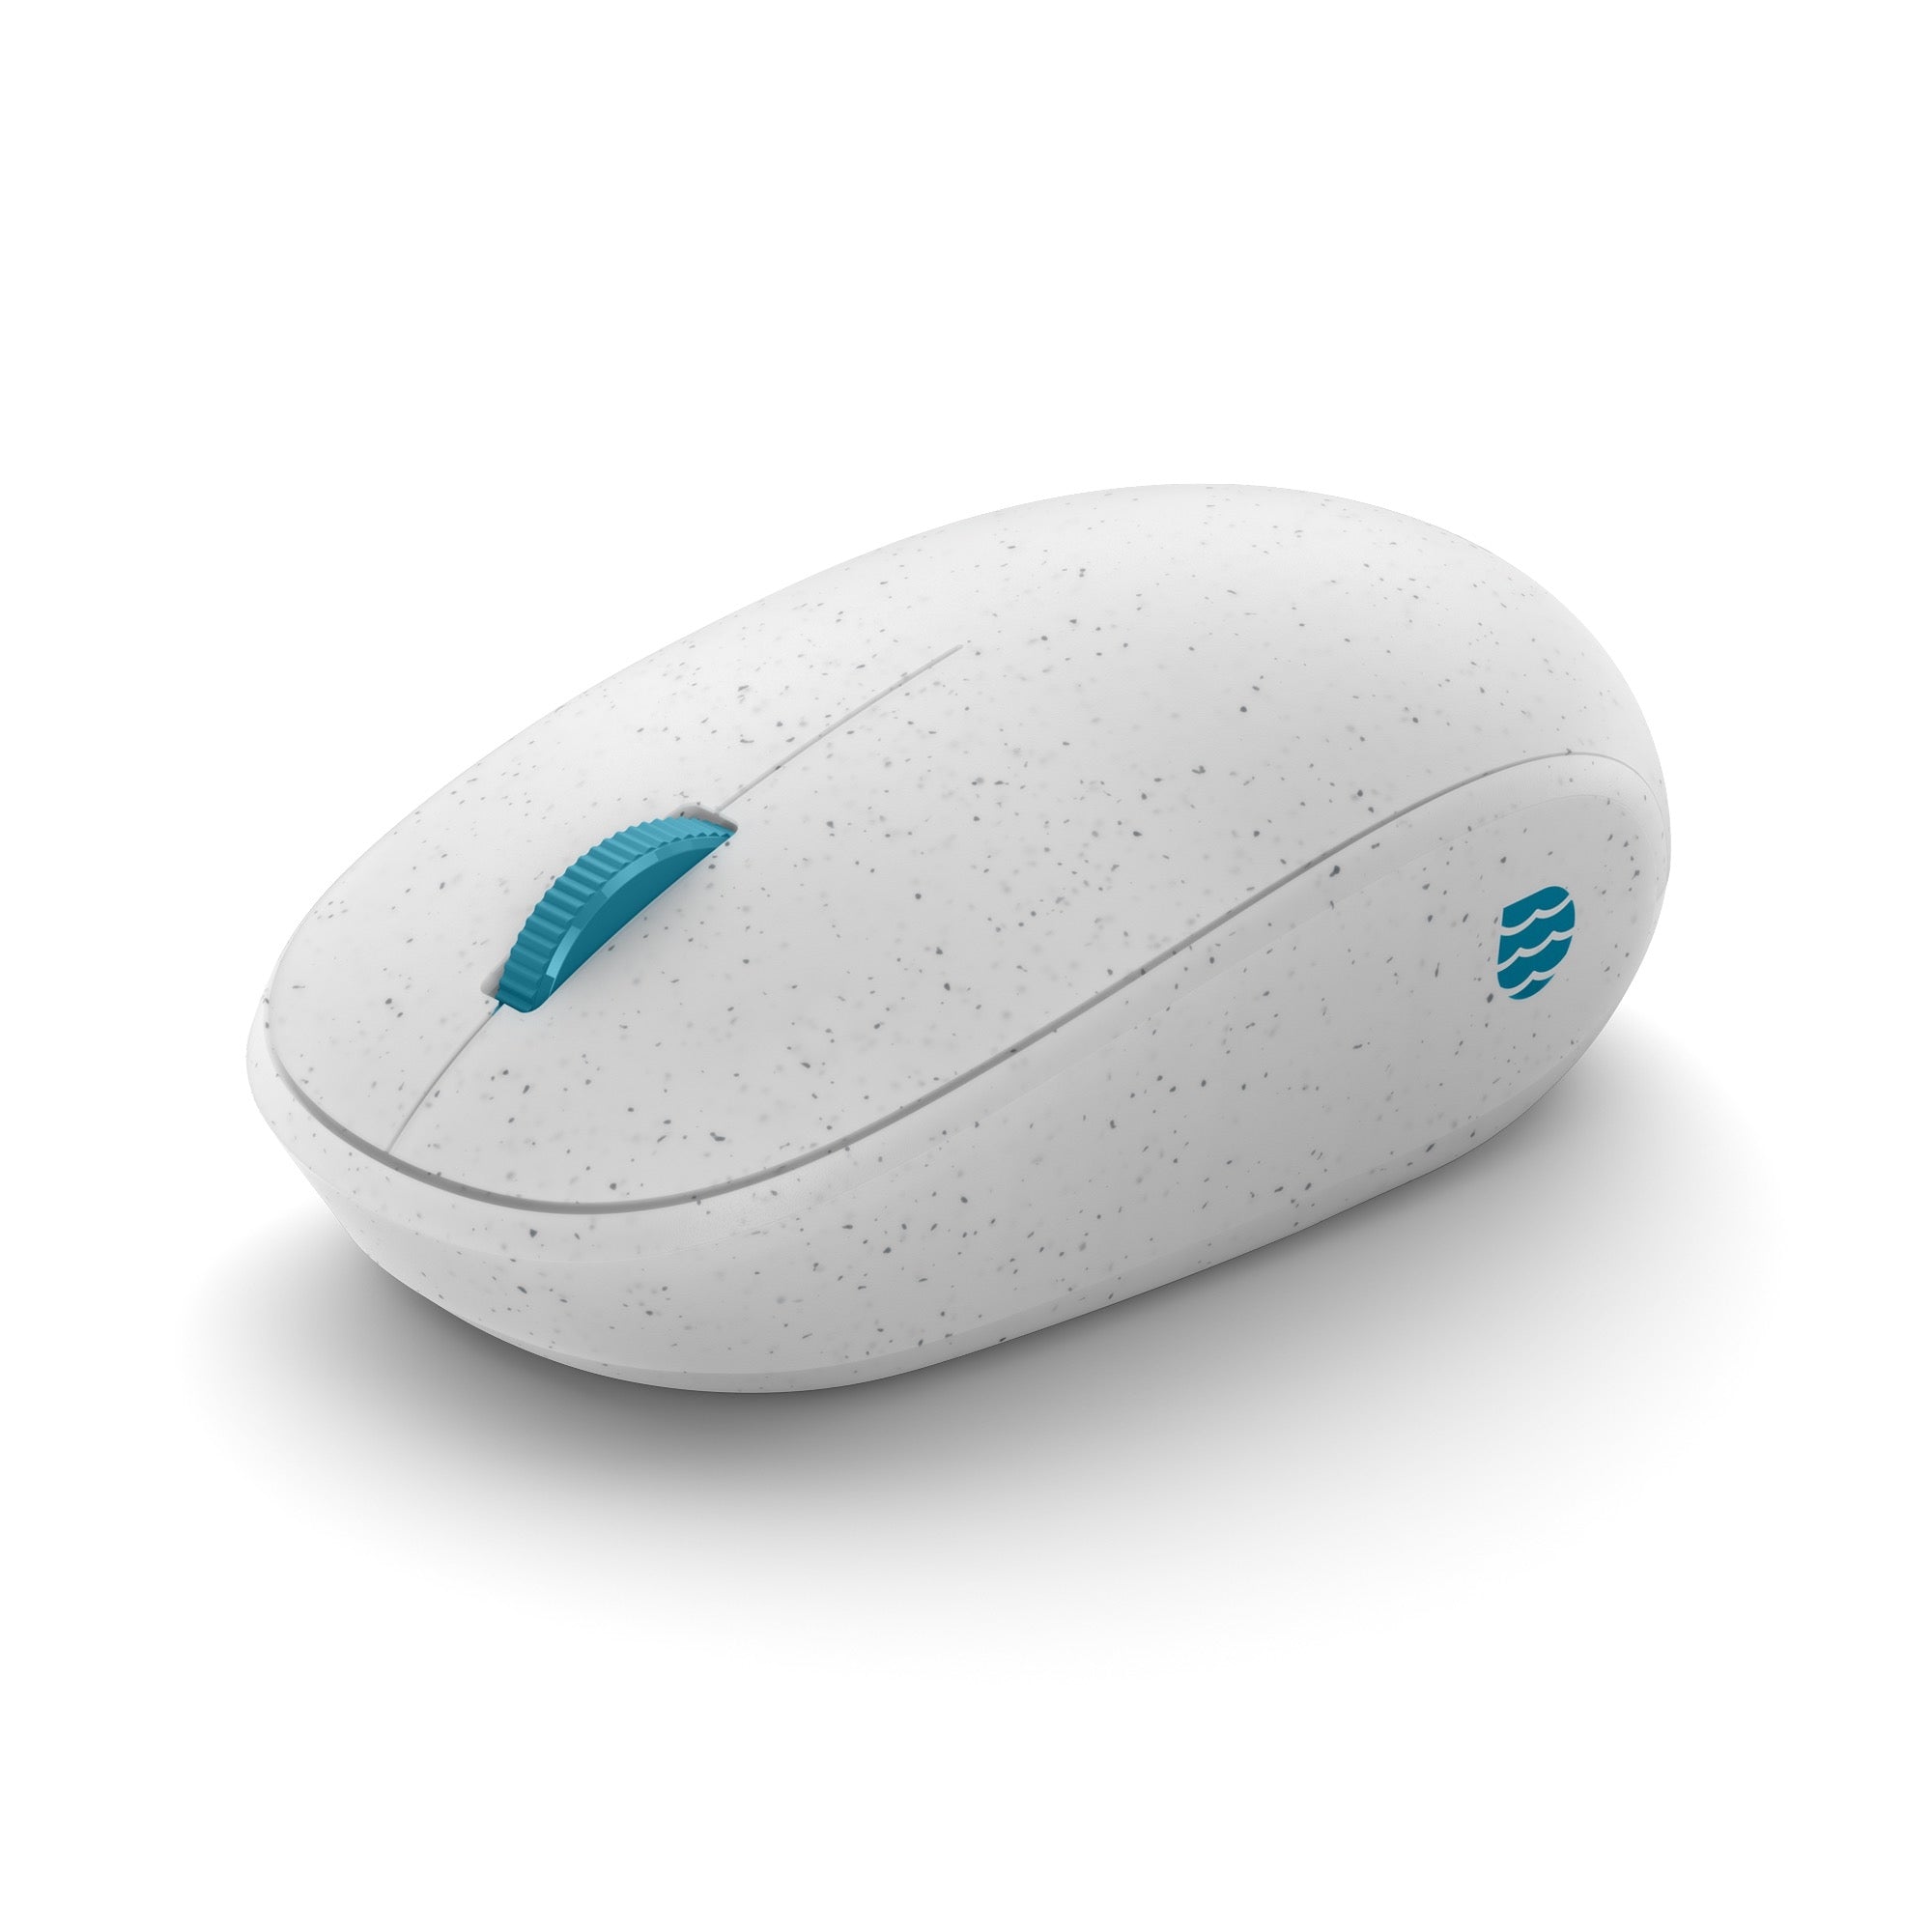 Mouse Microsoft 38-00019 Bluetooth Ocean Plastic Diseño Moderno (I38-00019)